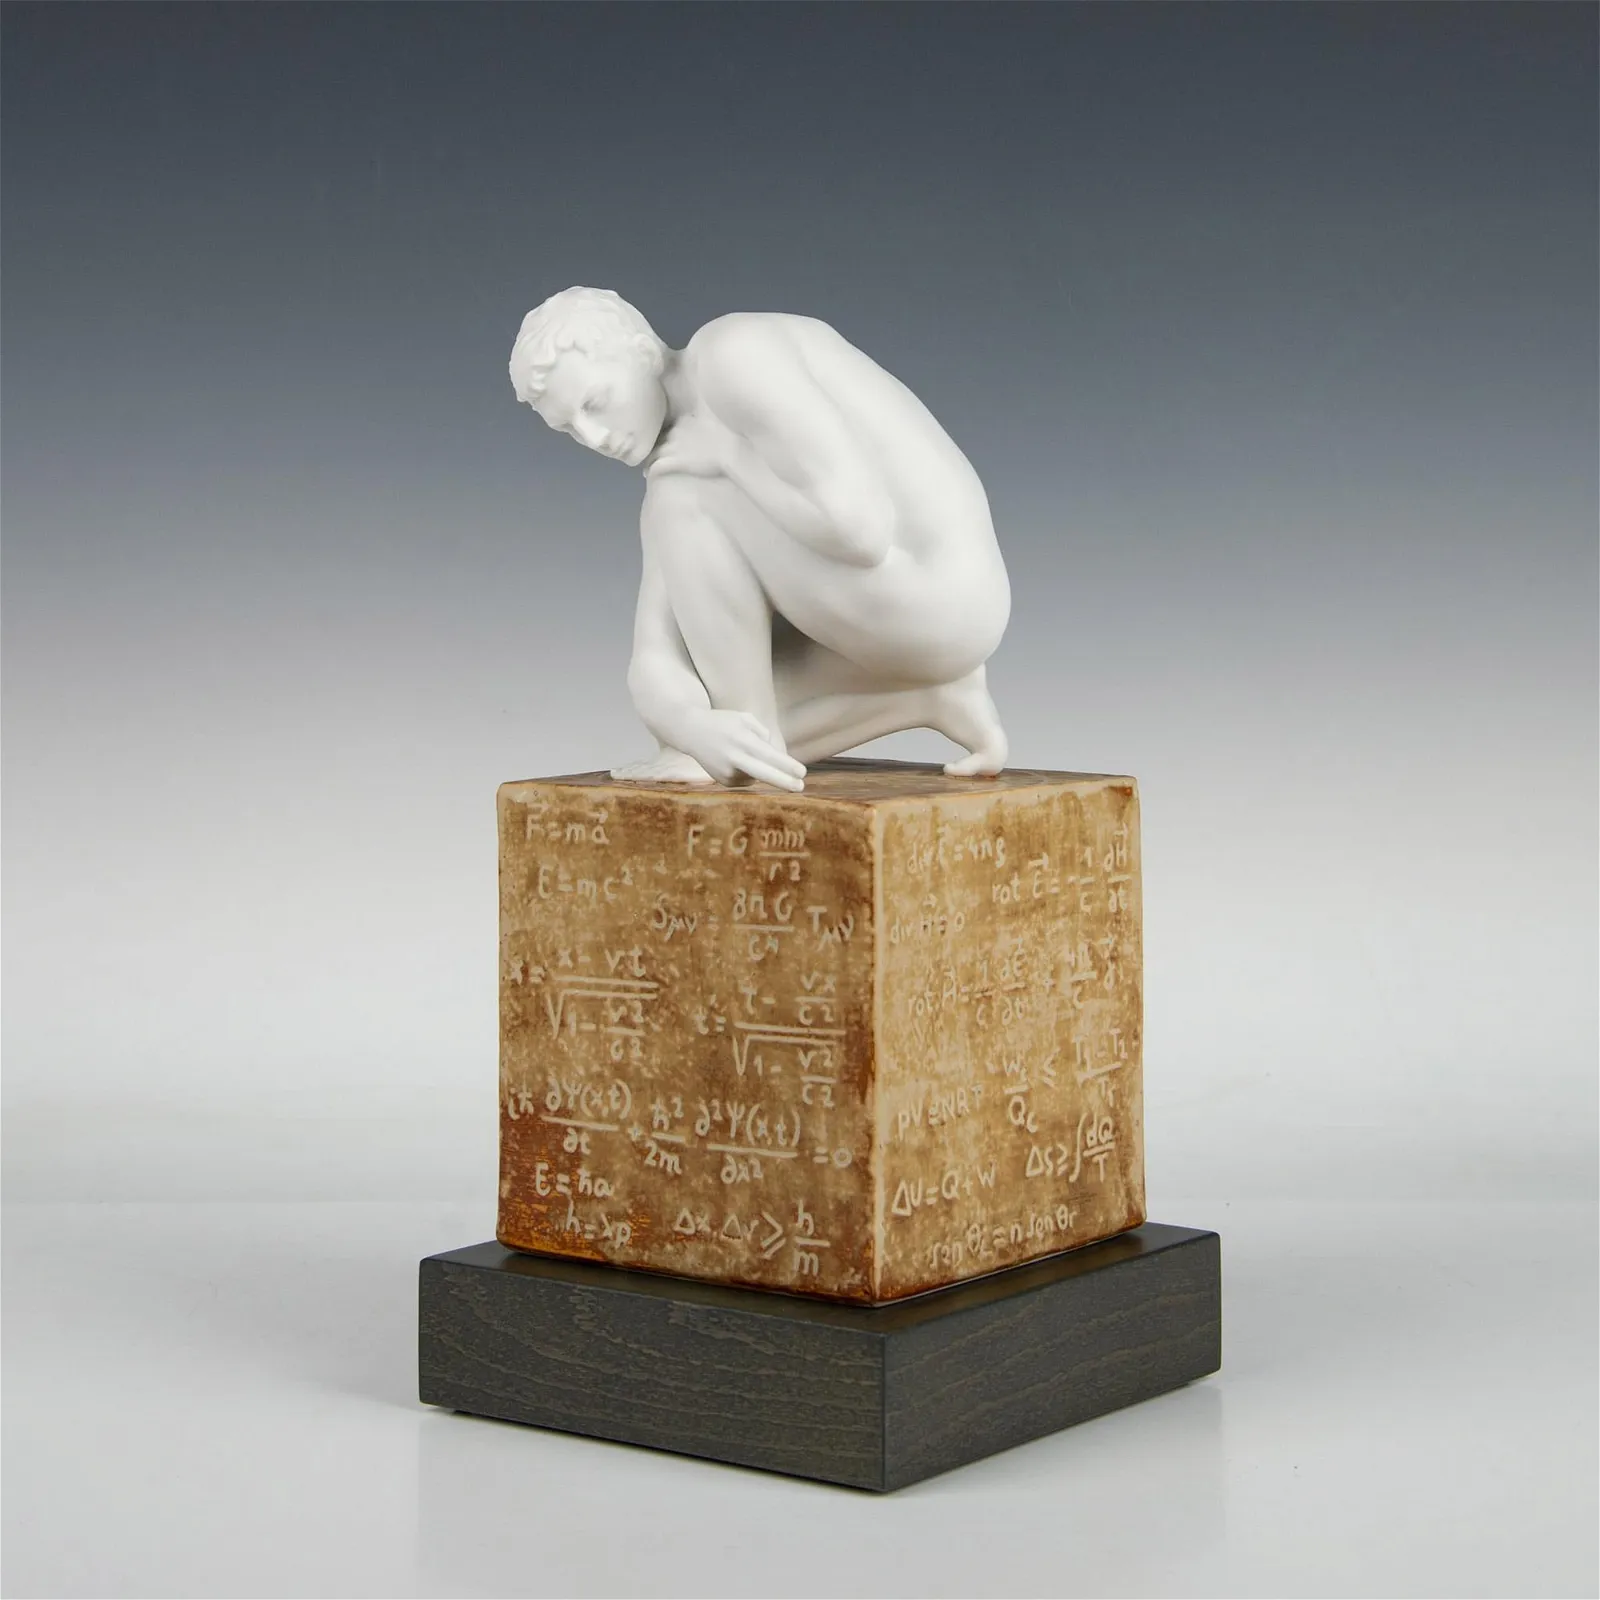 Lladro Porcelain Figure, Scientific 1018018